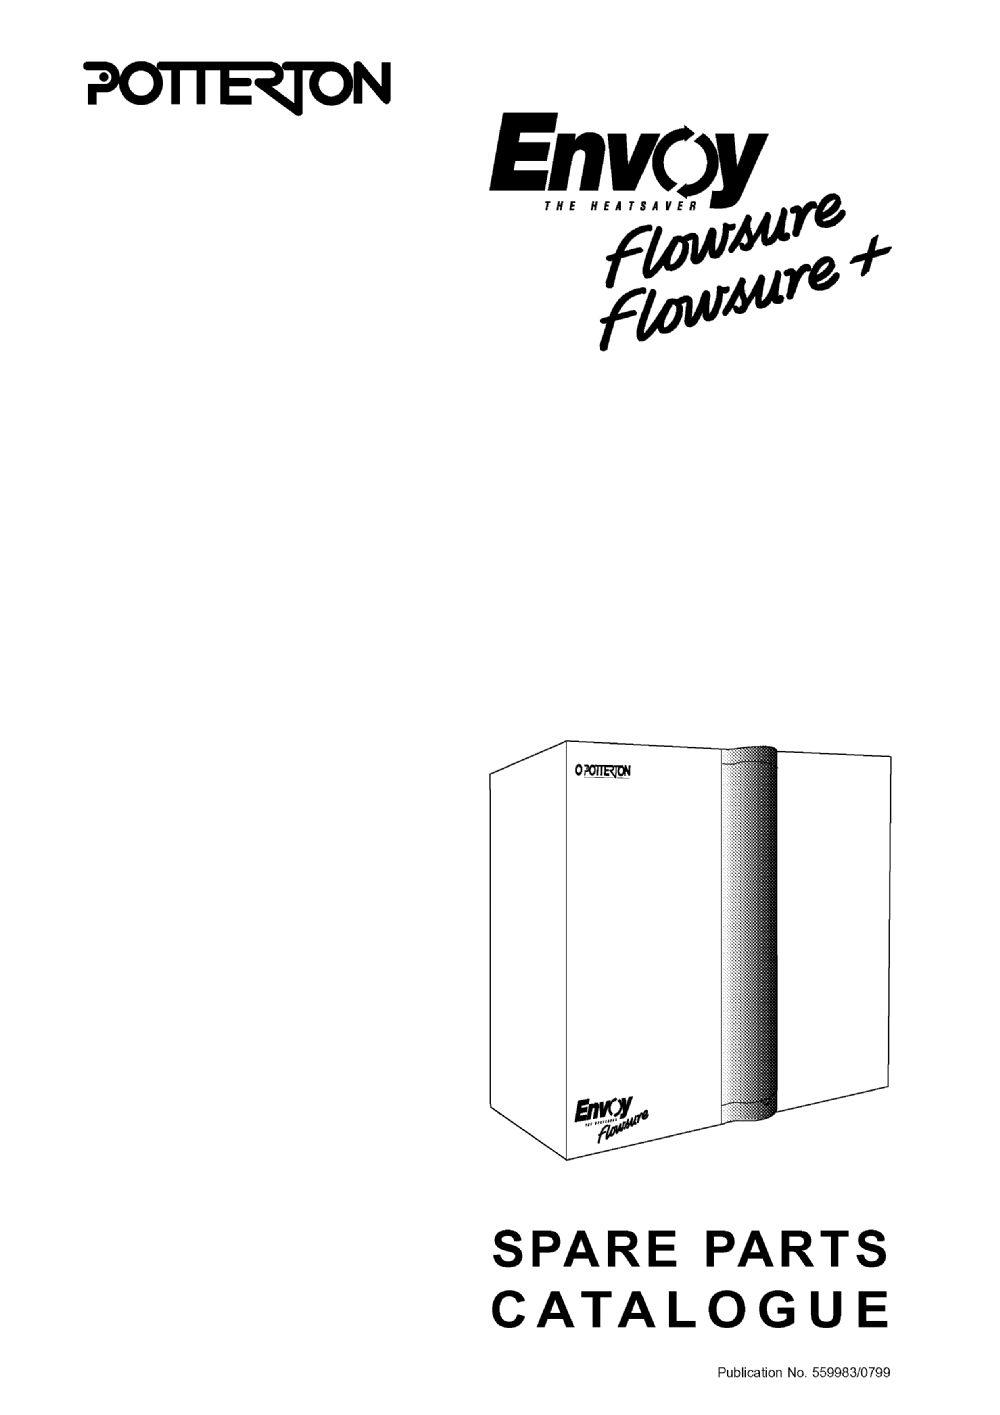 Envoy Flowsure & Flowsure + - appliance_4164